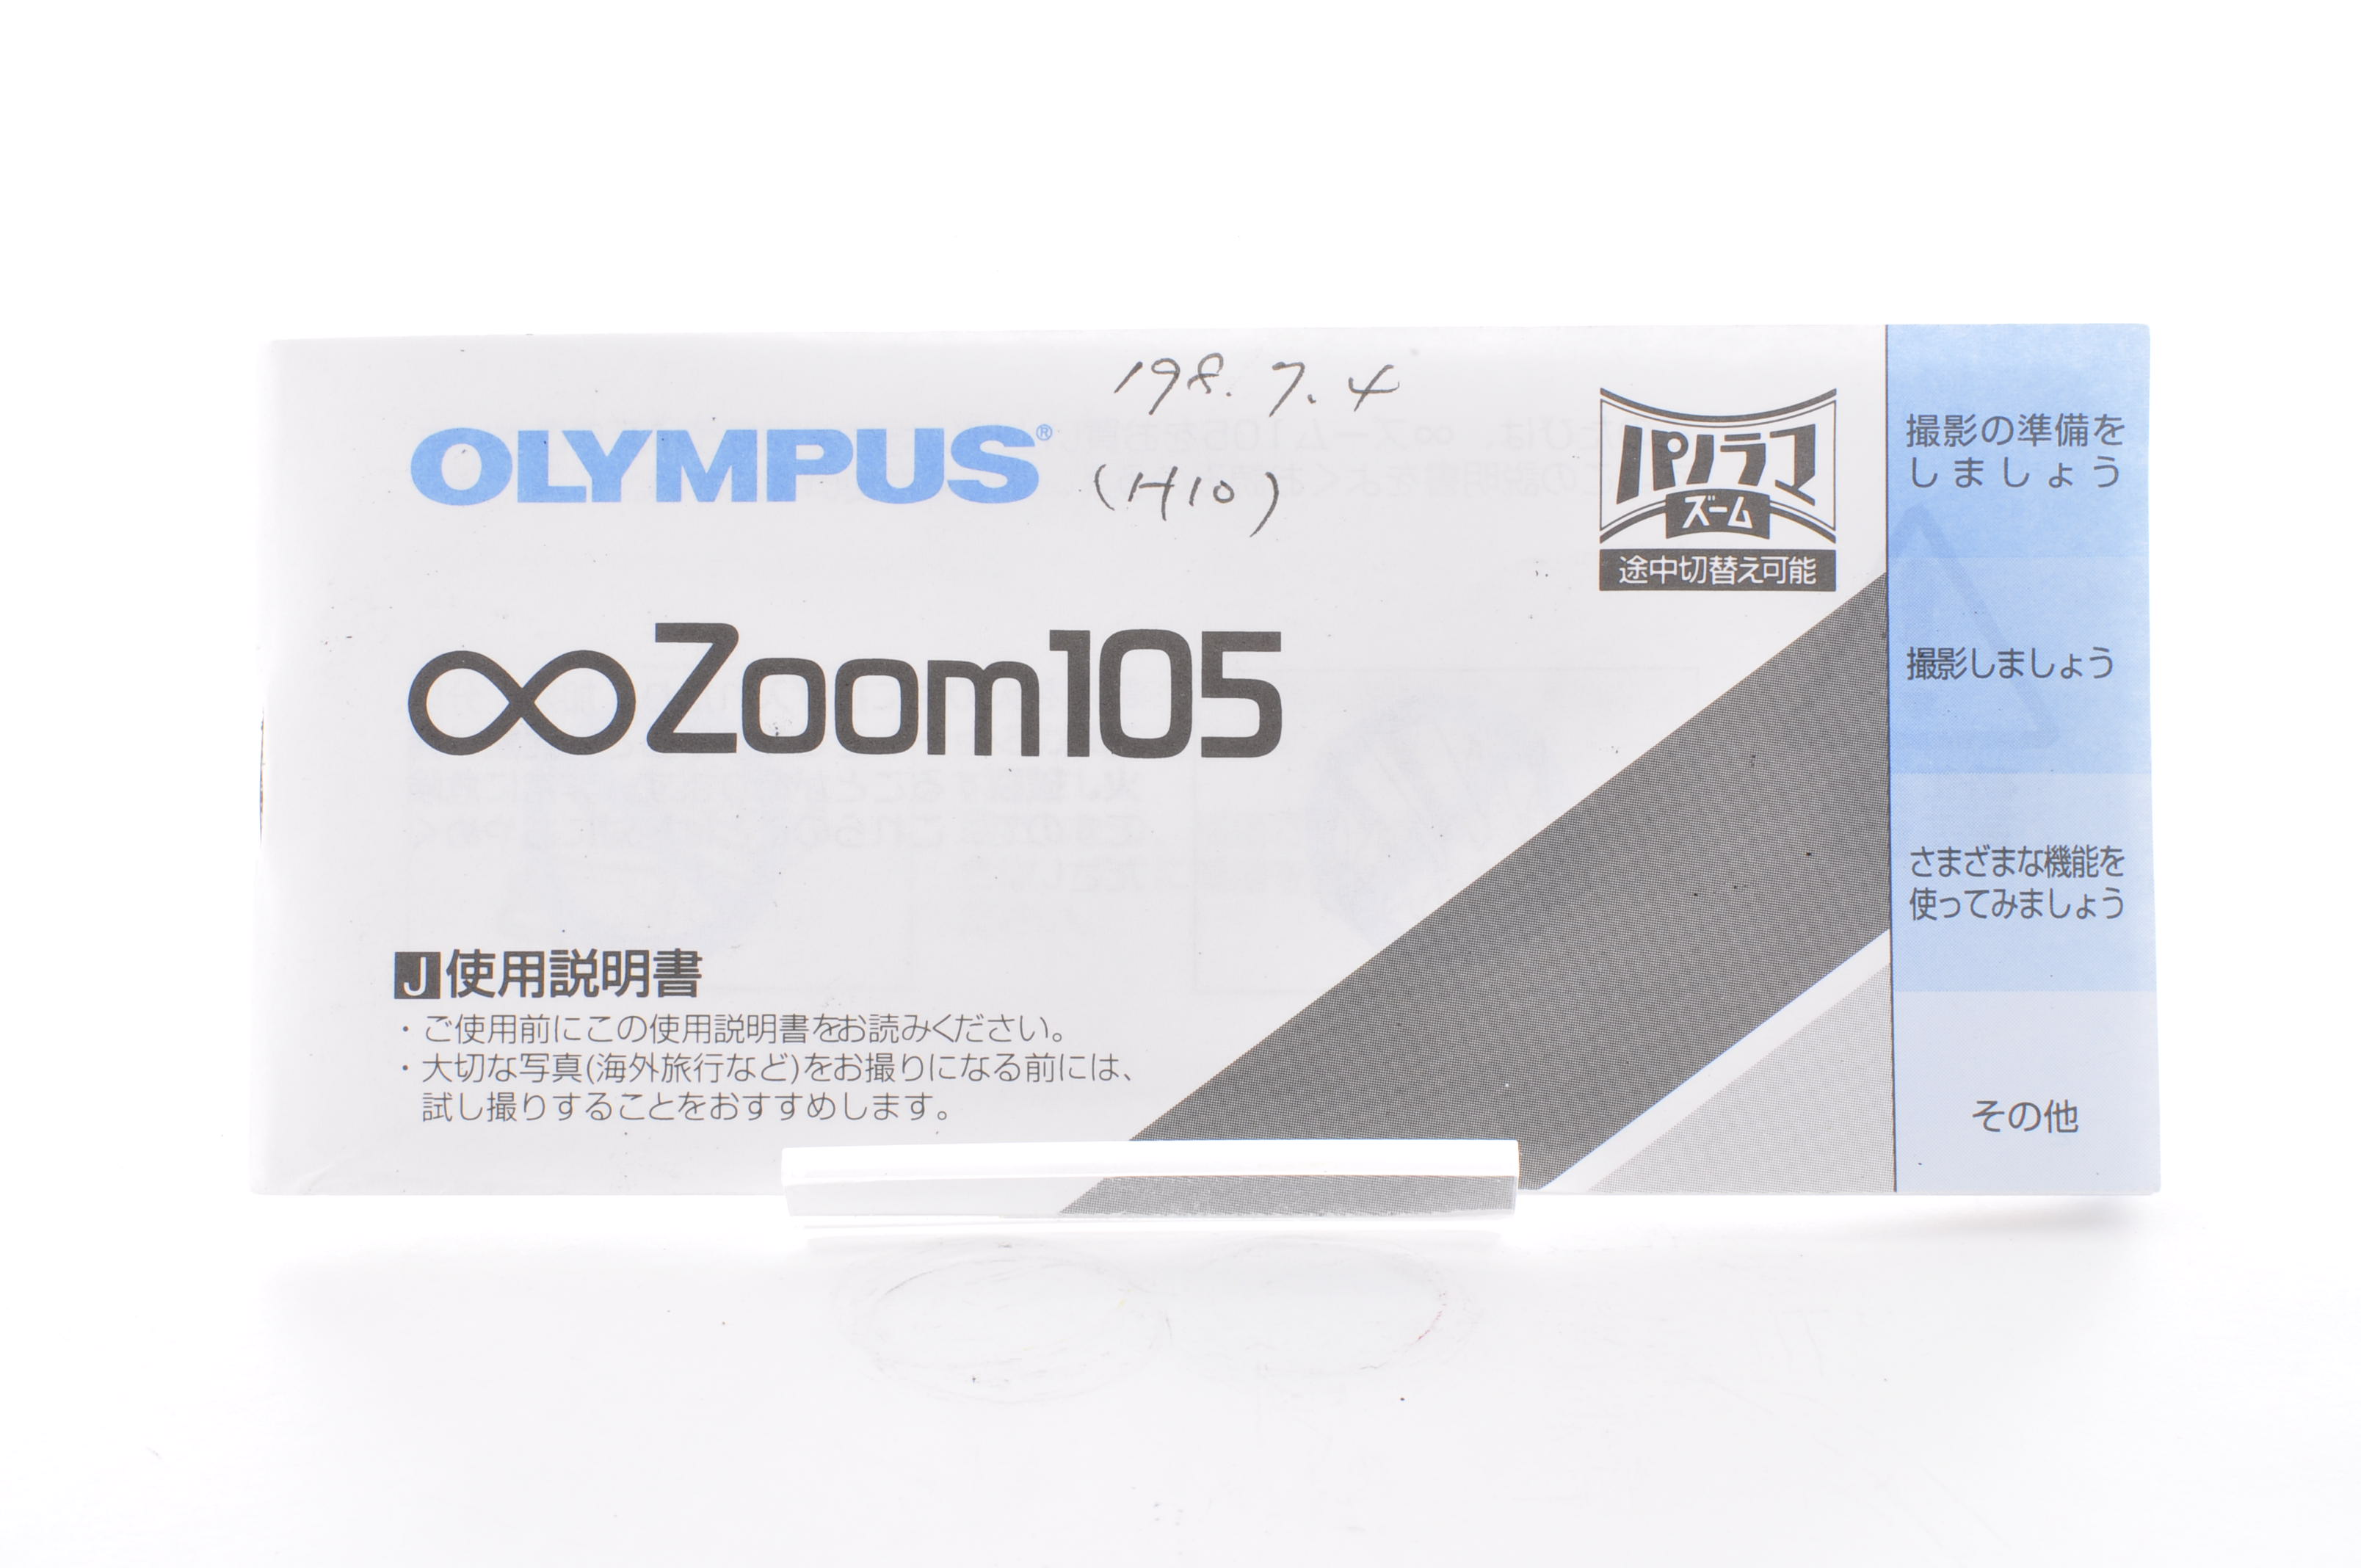 Olympus Infinity Accura Zoom 105 Point&Shoot 35mm Film Camera [Near Mint] Japan img17